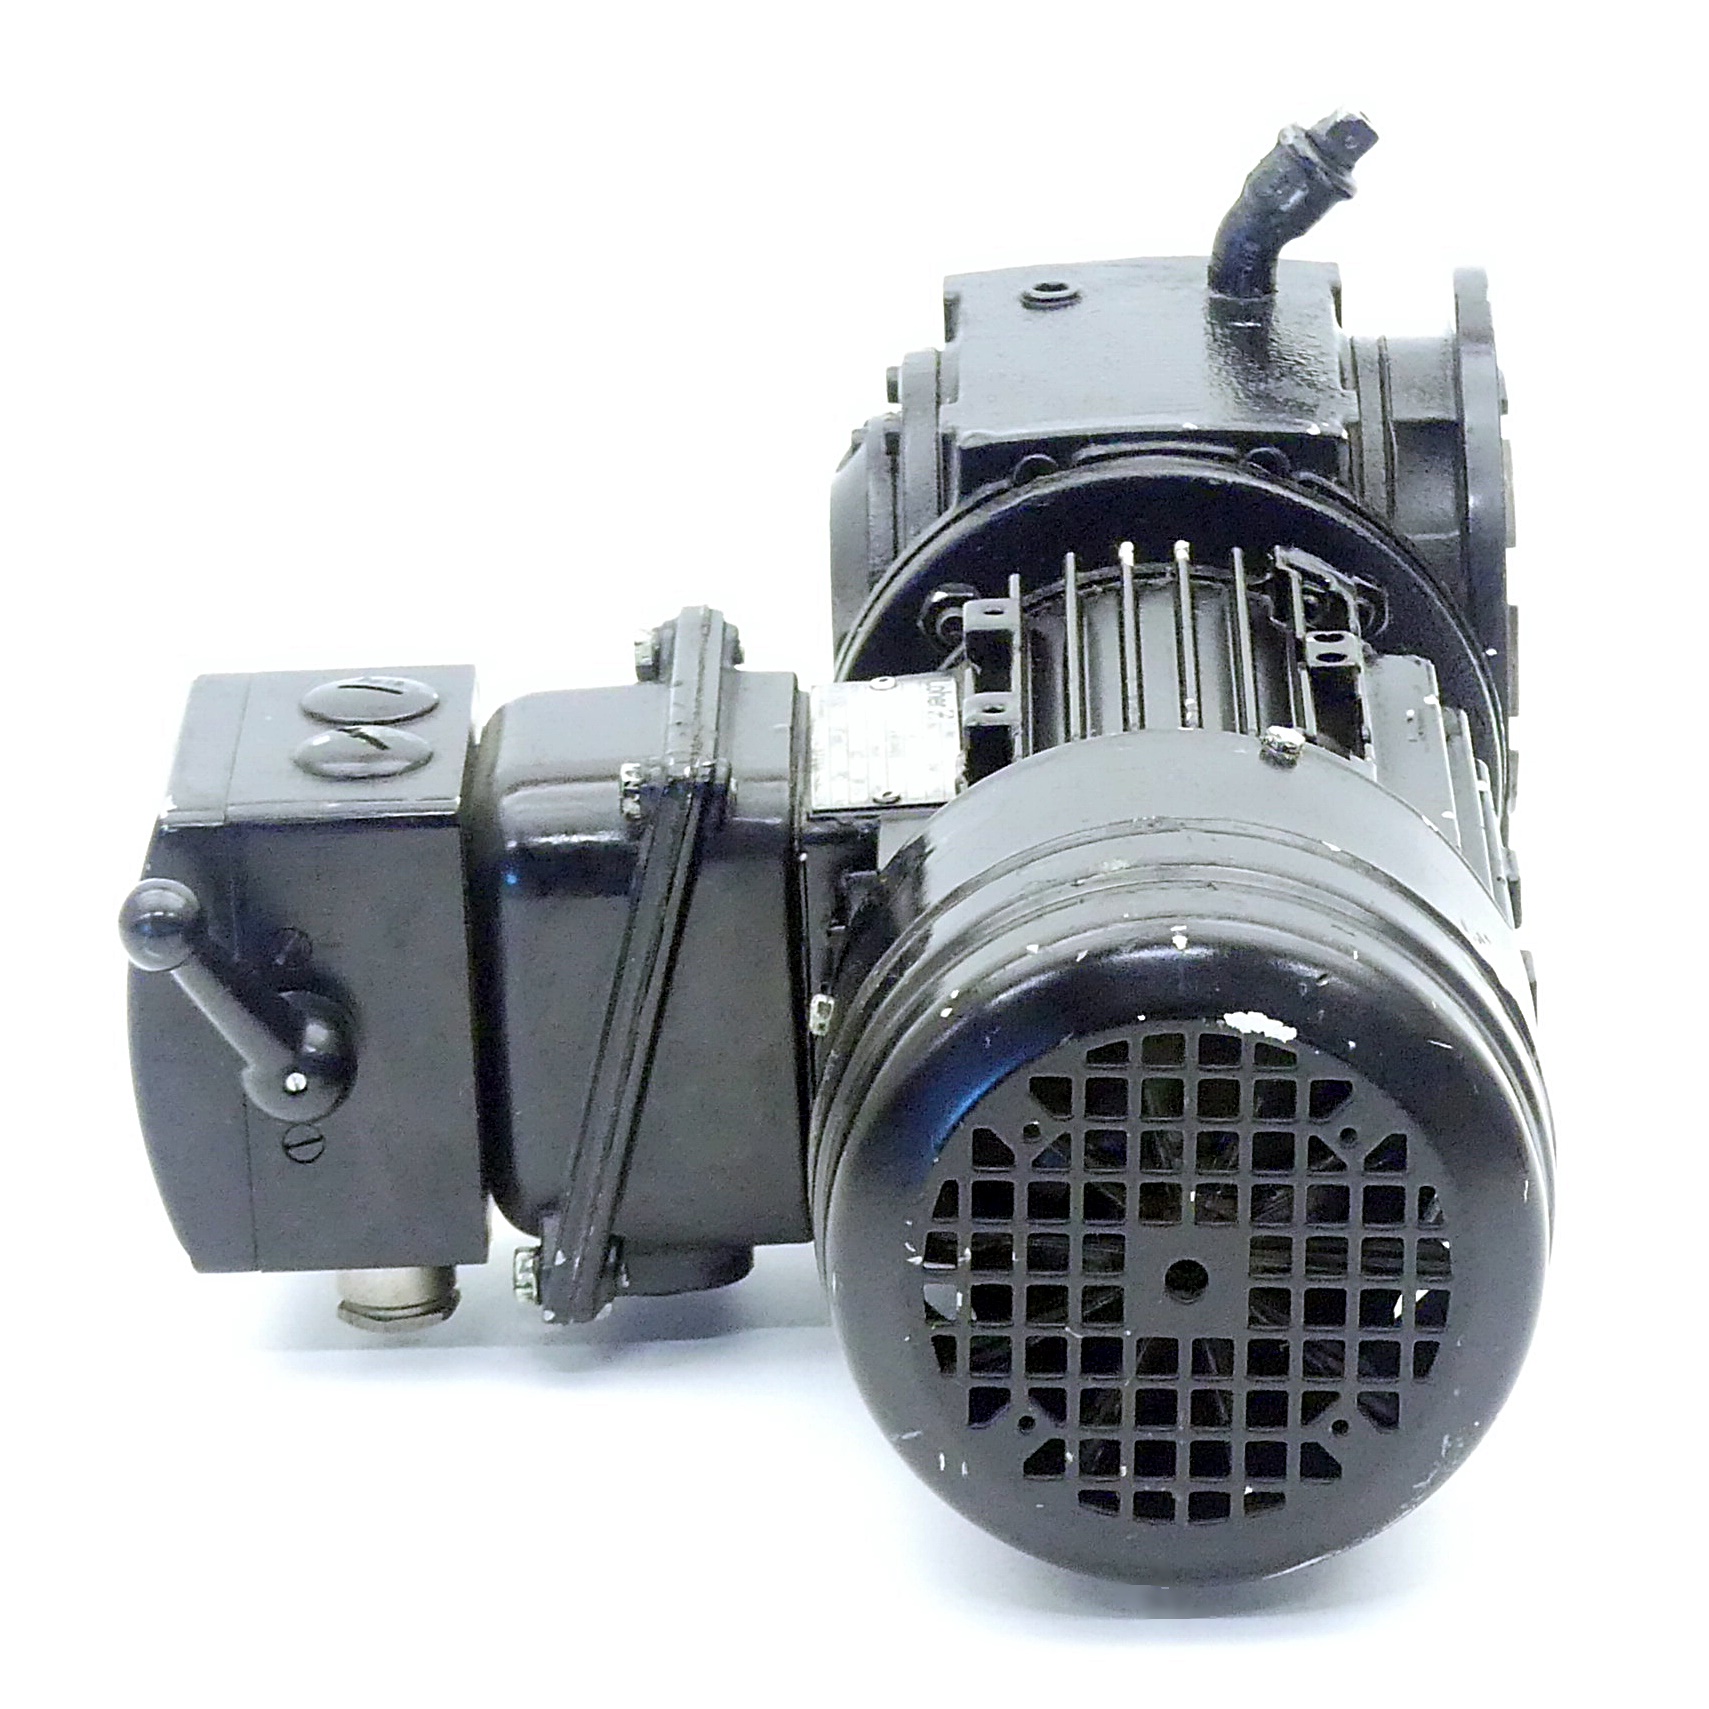 gear motor ABCA-01BG-426 + DVW1-1451-022/033 